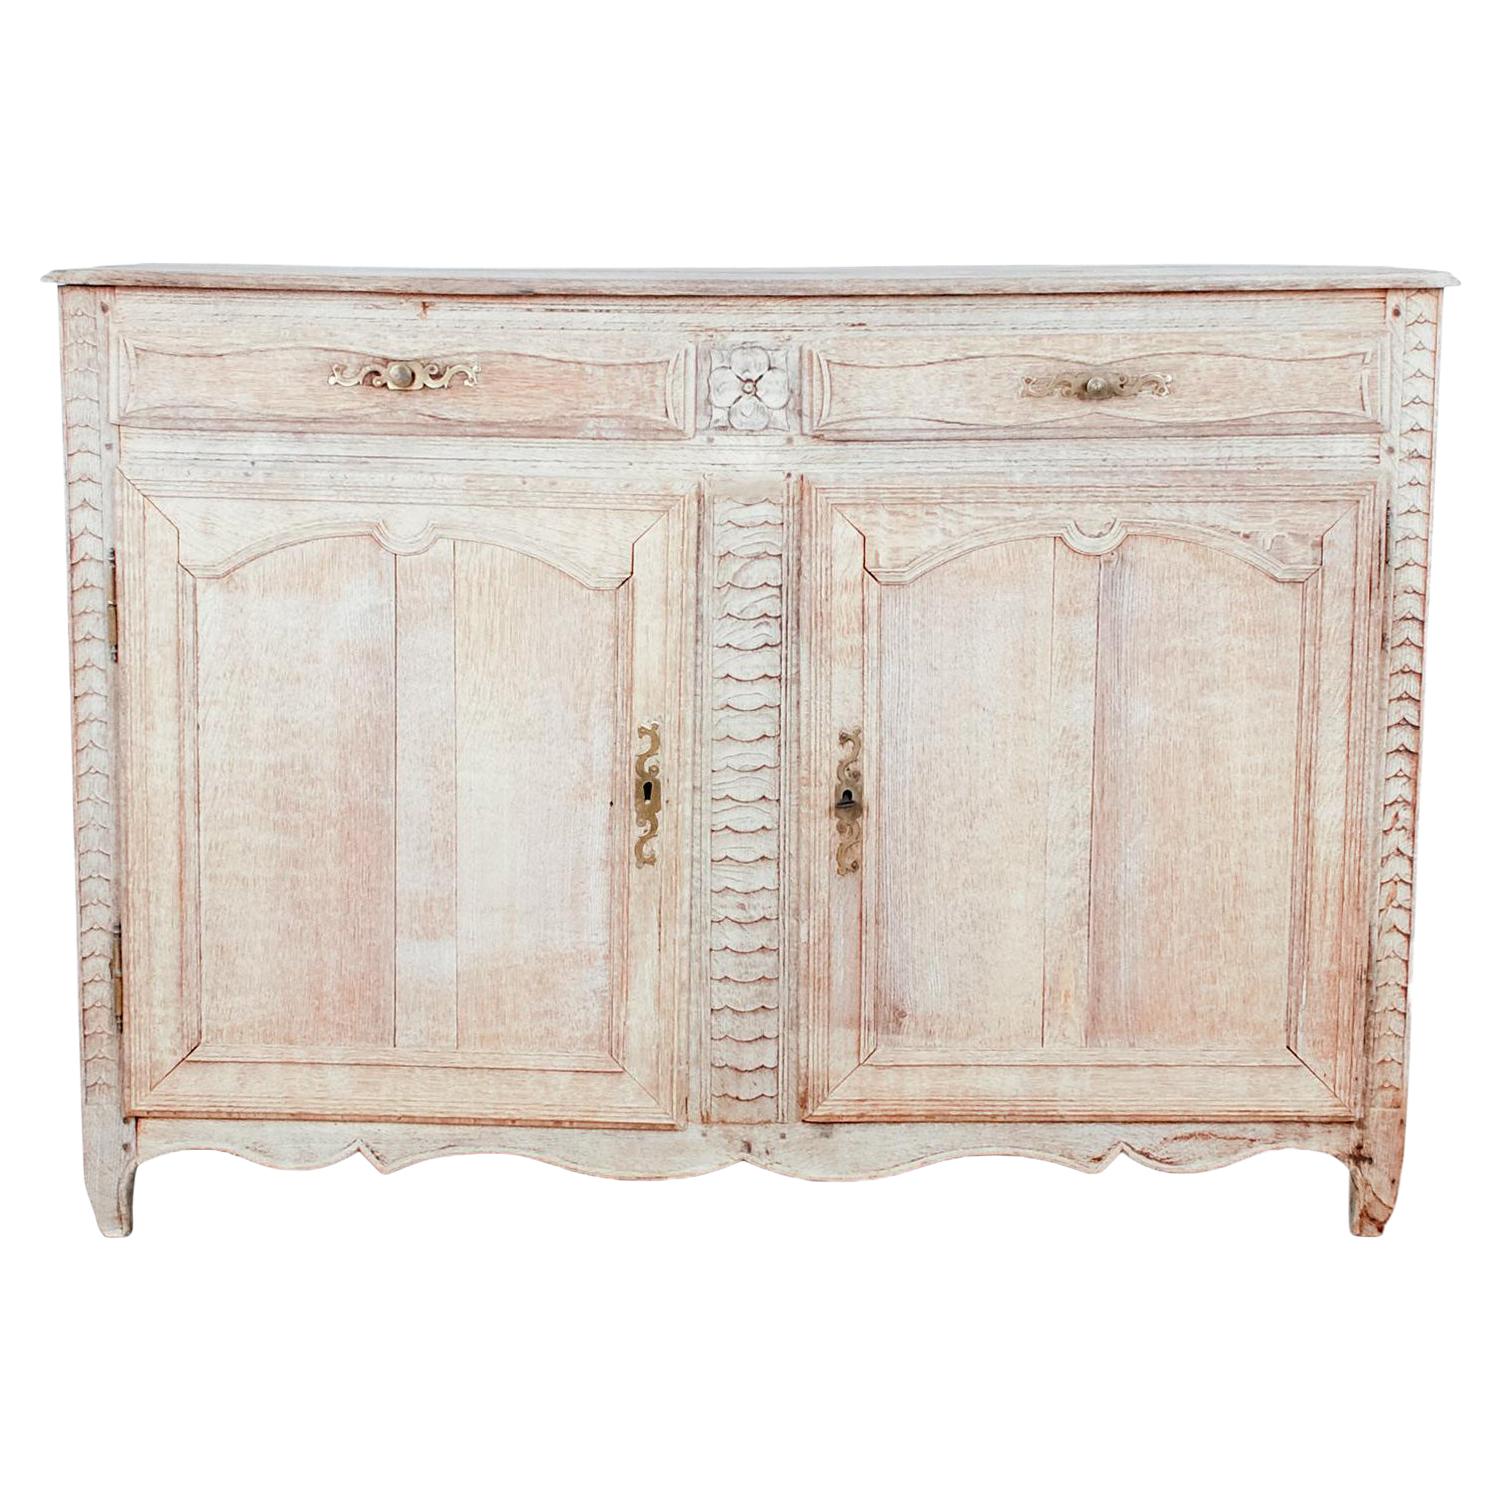 Mid-19th Century Bleached Oak Buffet Cabinet